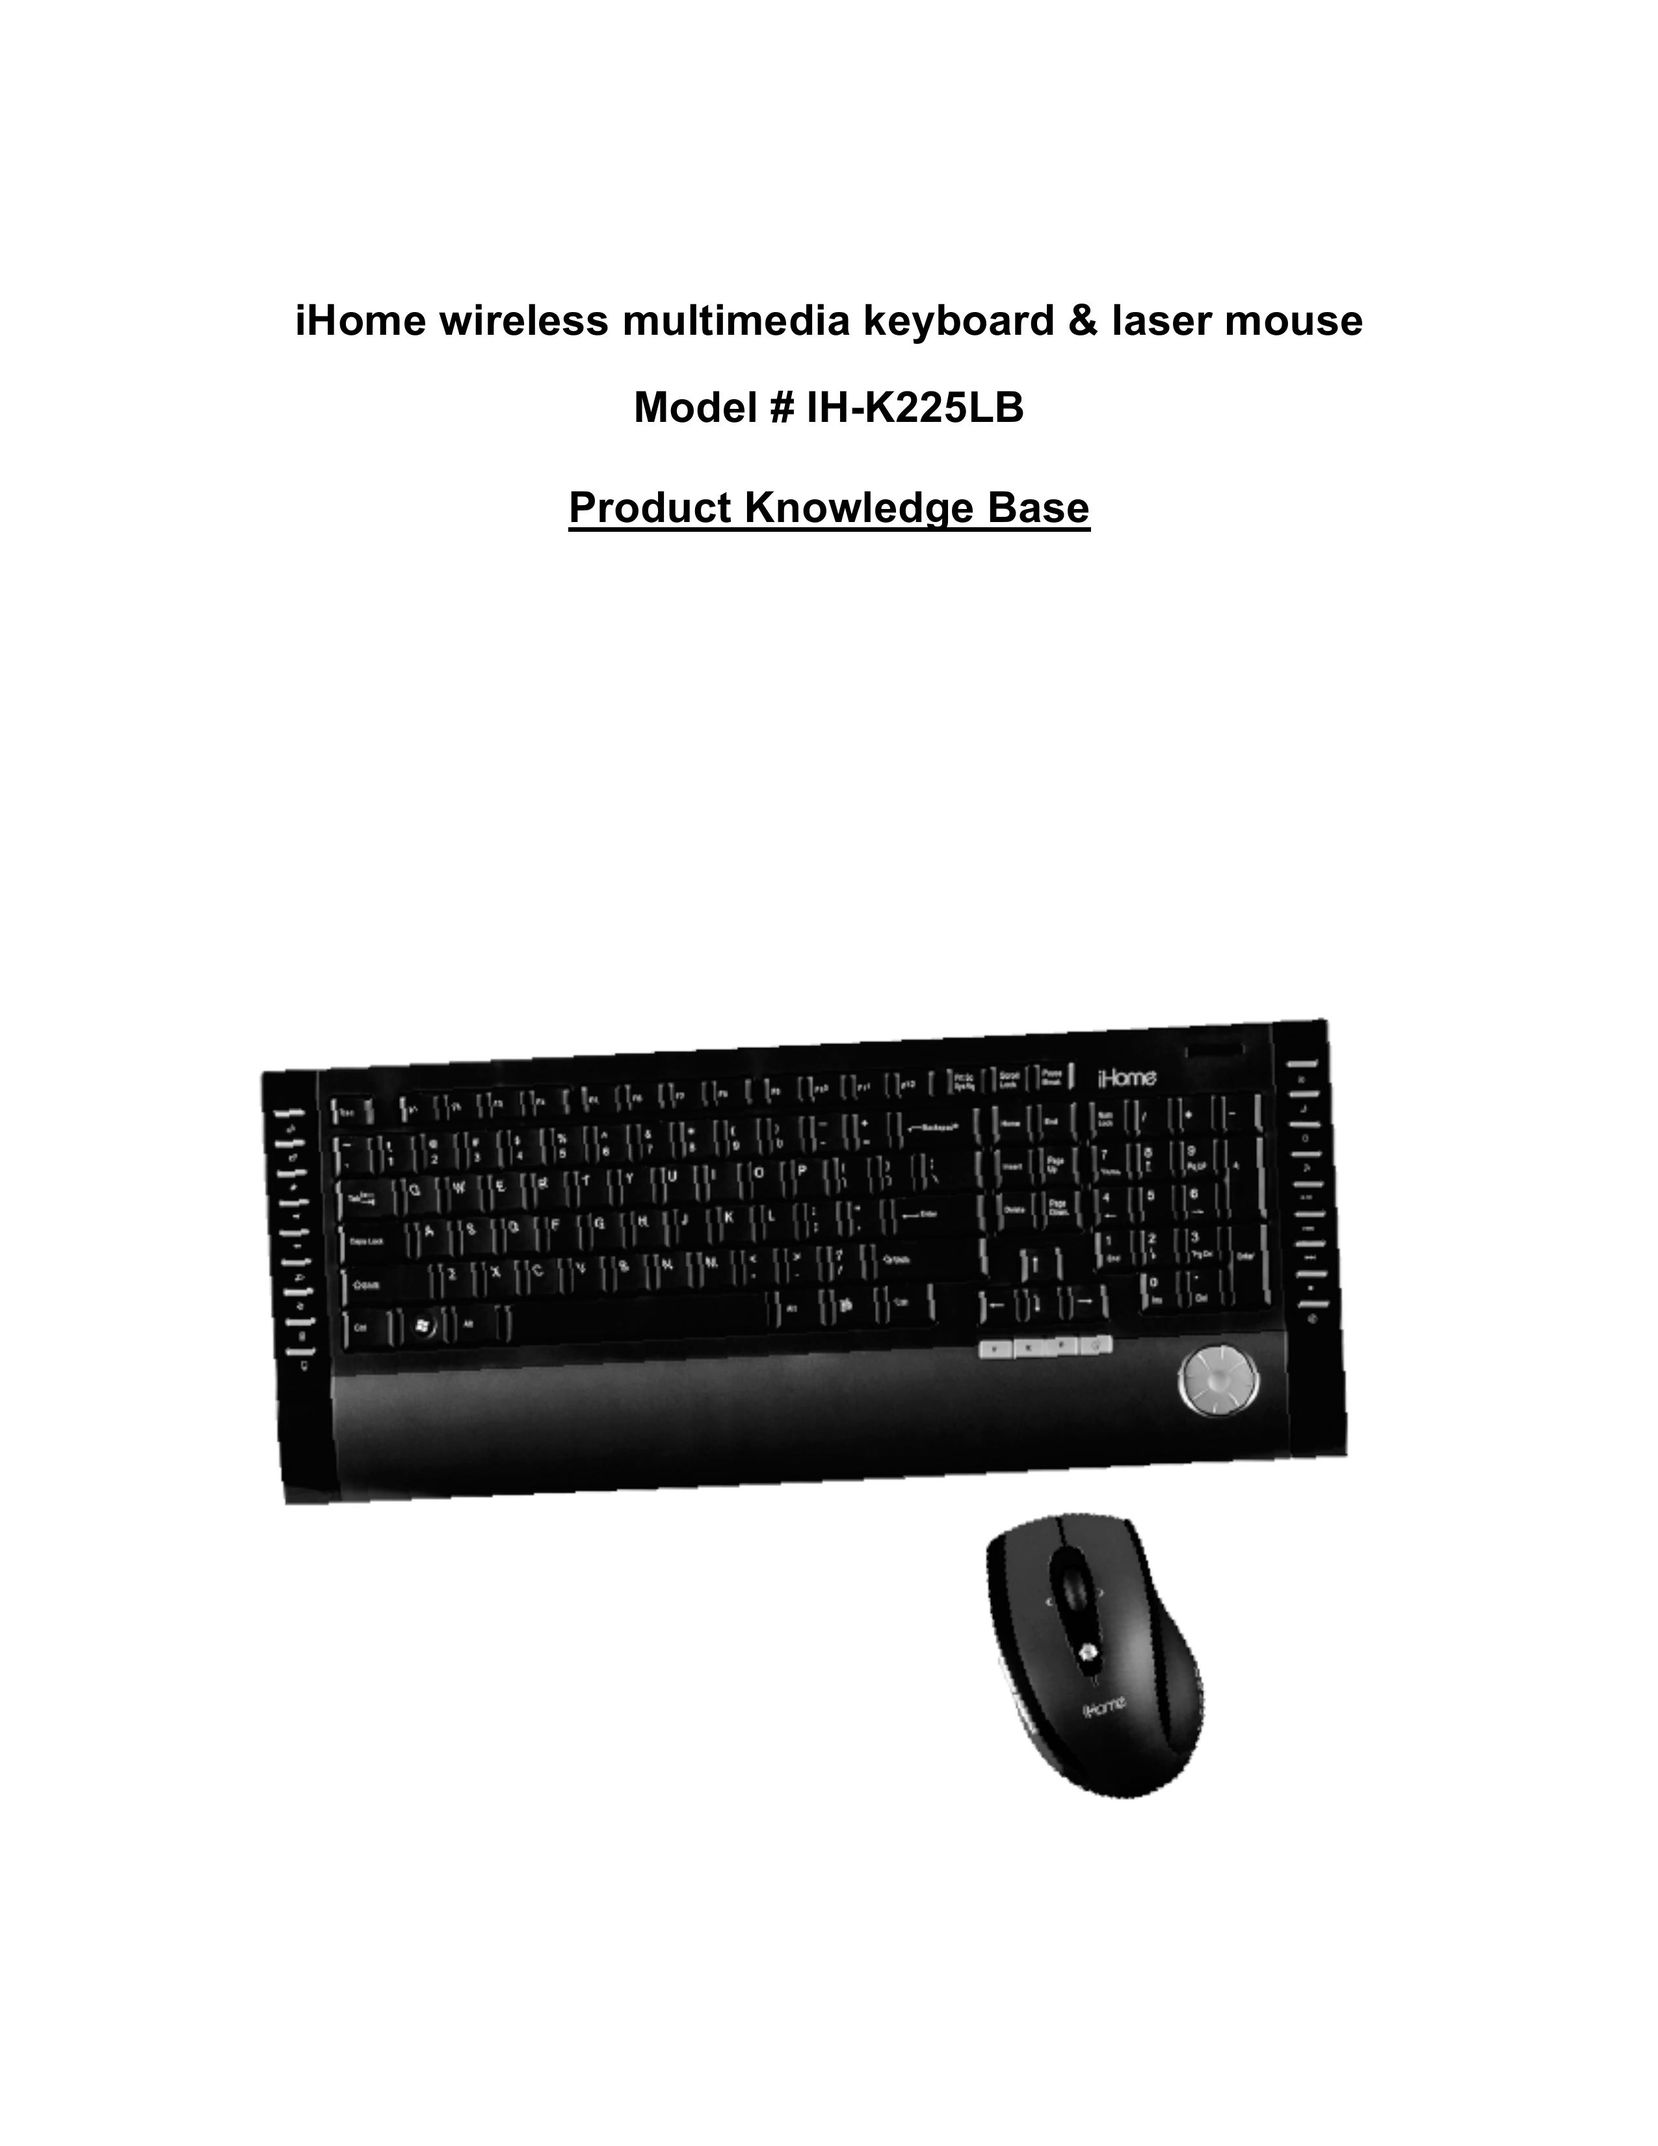 iHome IH-K225LB Computer Keyboard User Manual